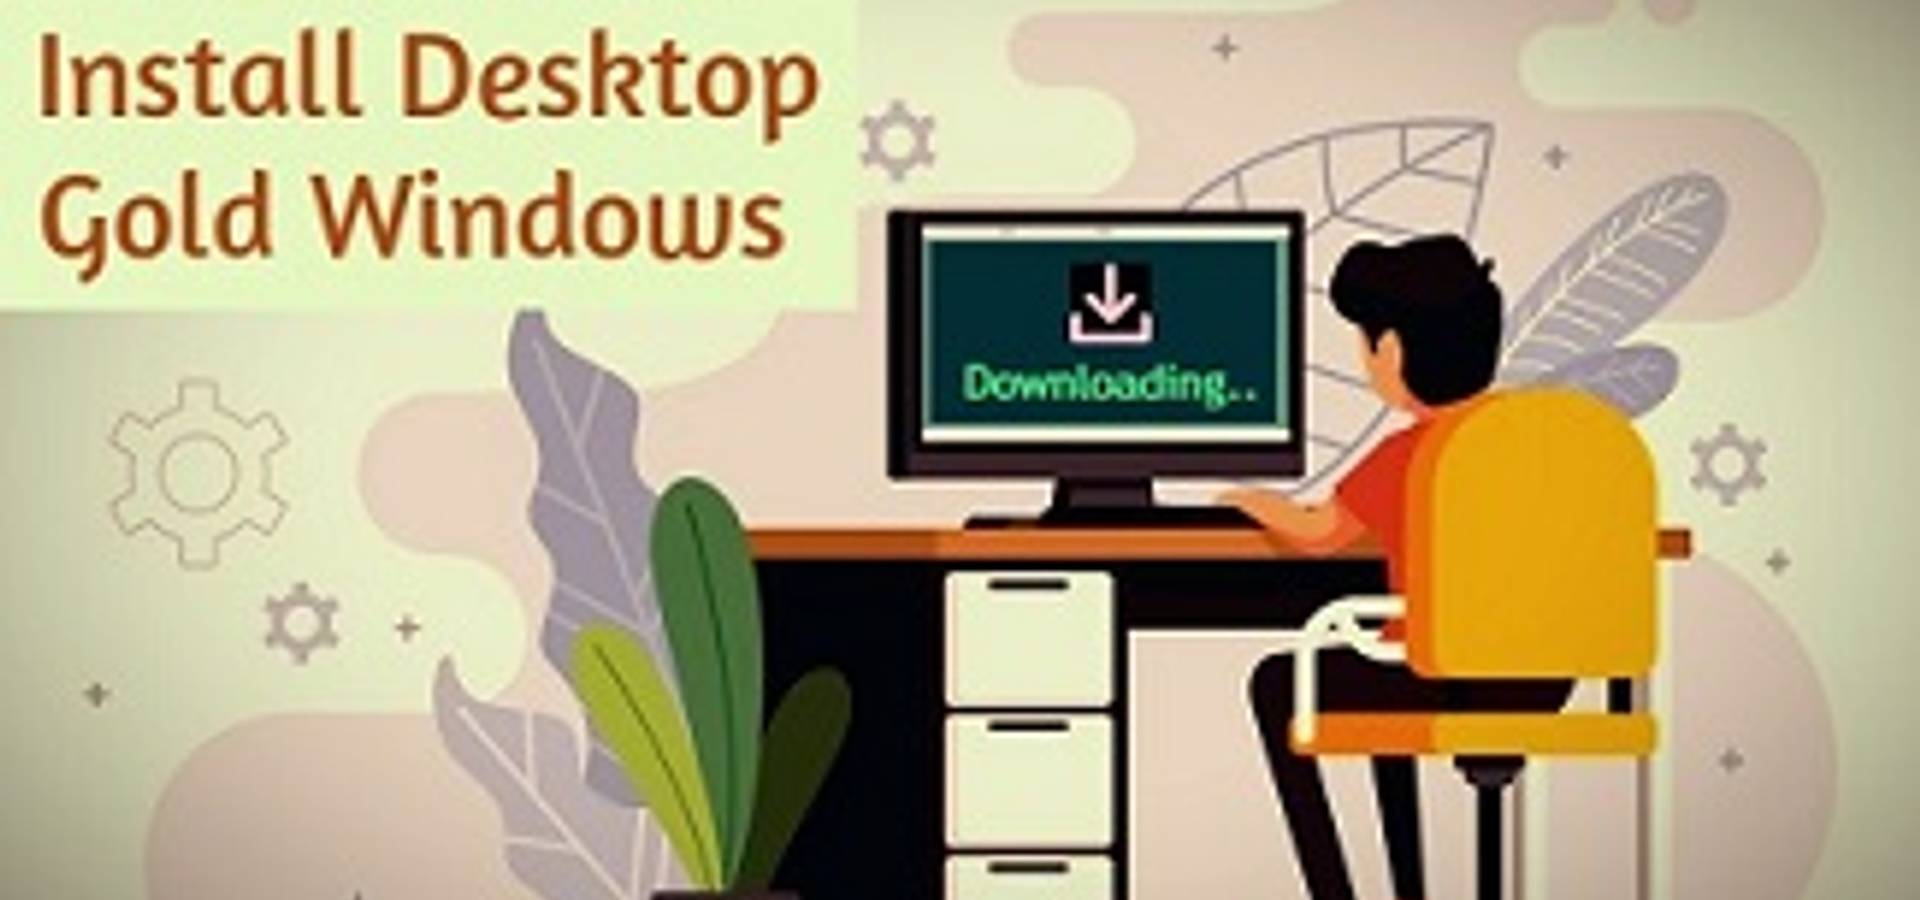 aol desktop gold download free for windows 7